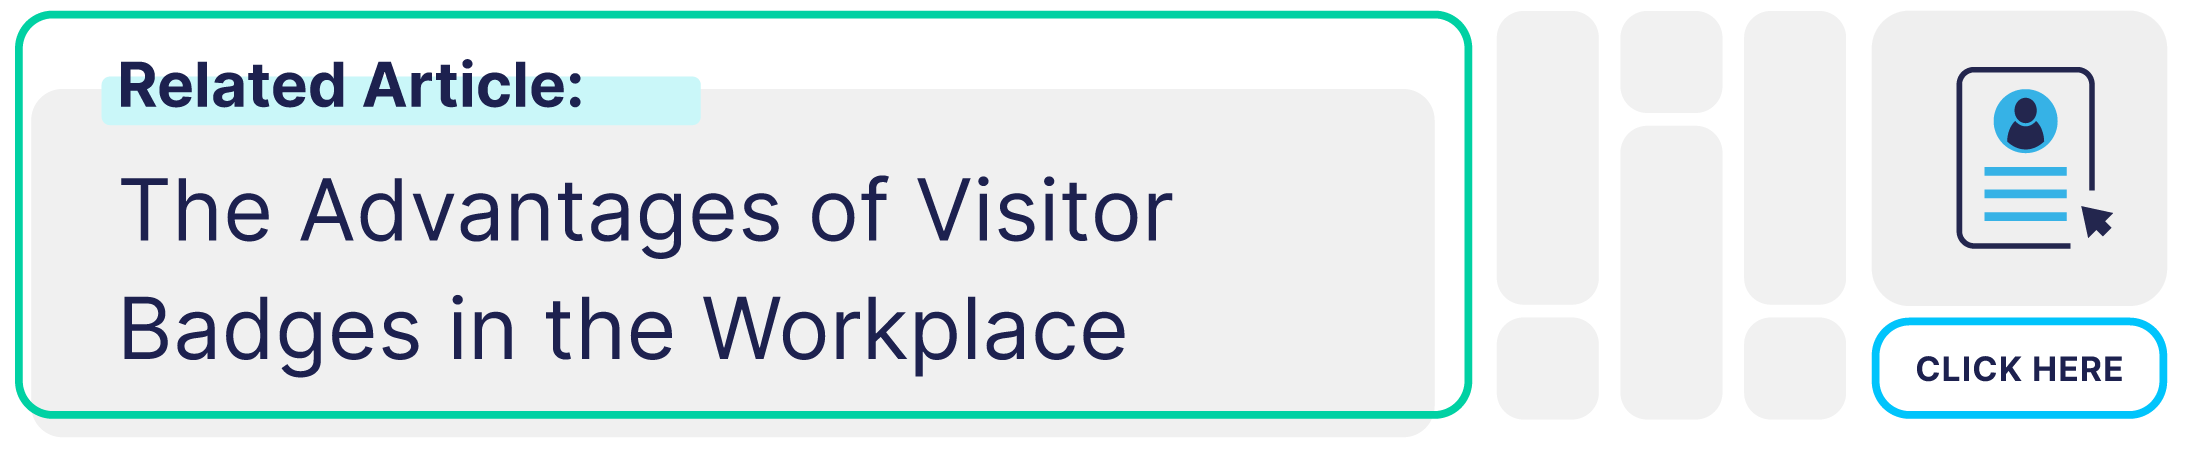 Advantages of Visitor Badges Workplace Banner